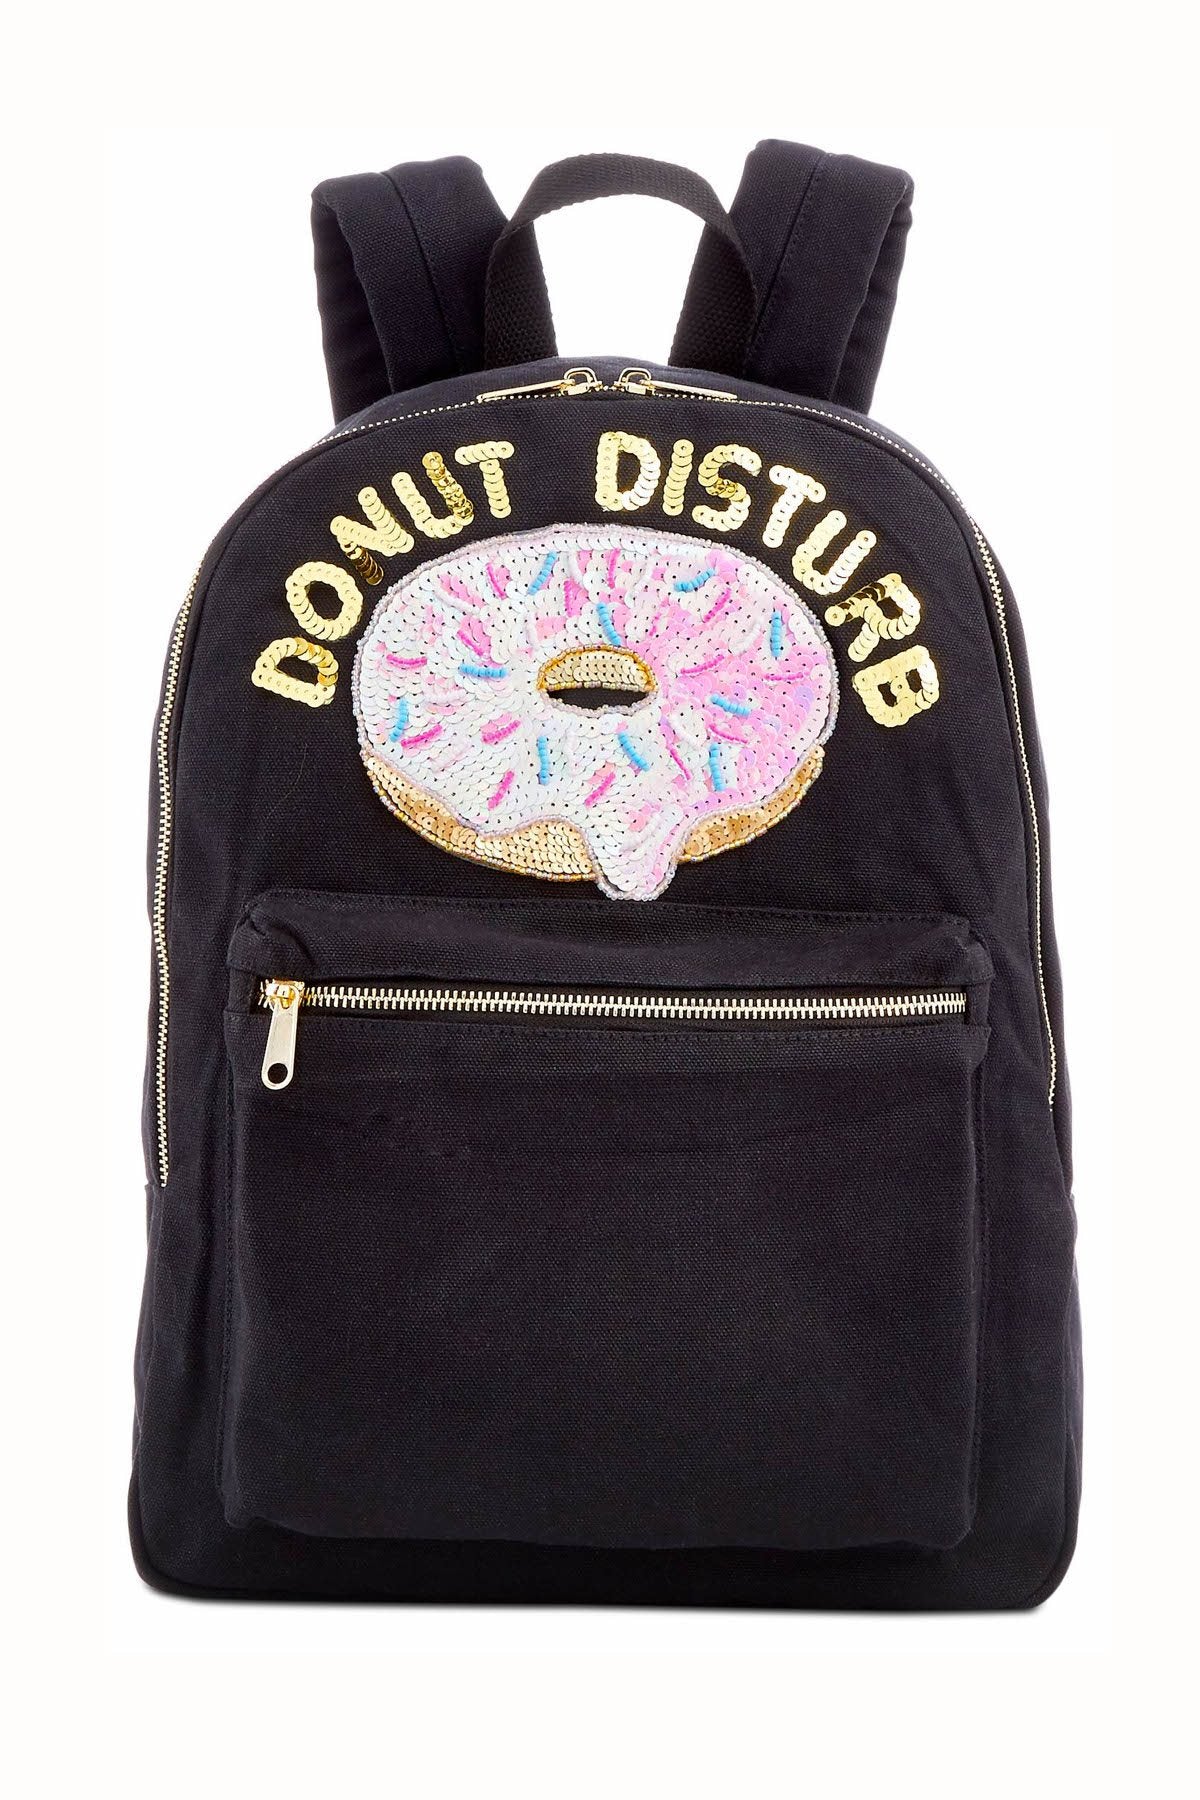 Bow & Drape Black Donut Disturb Backpack